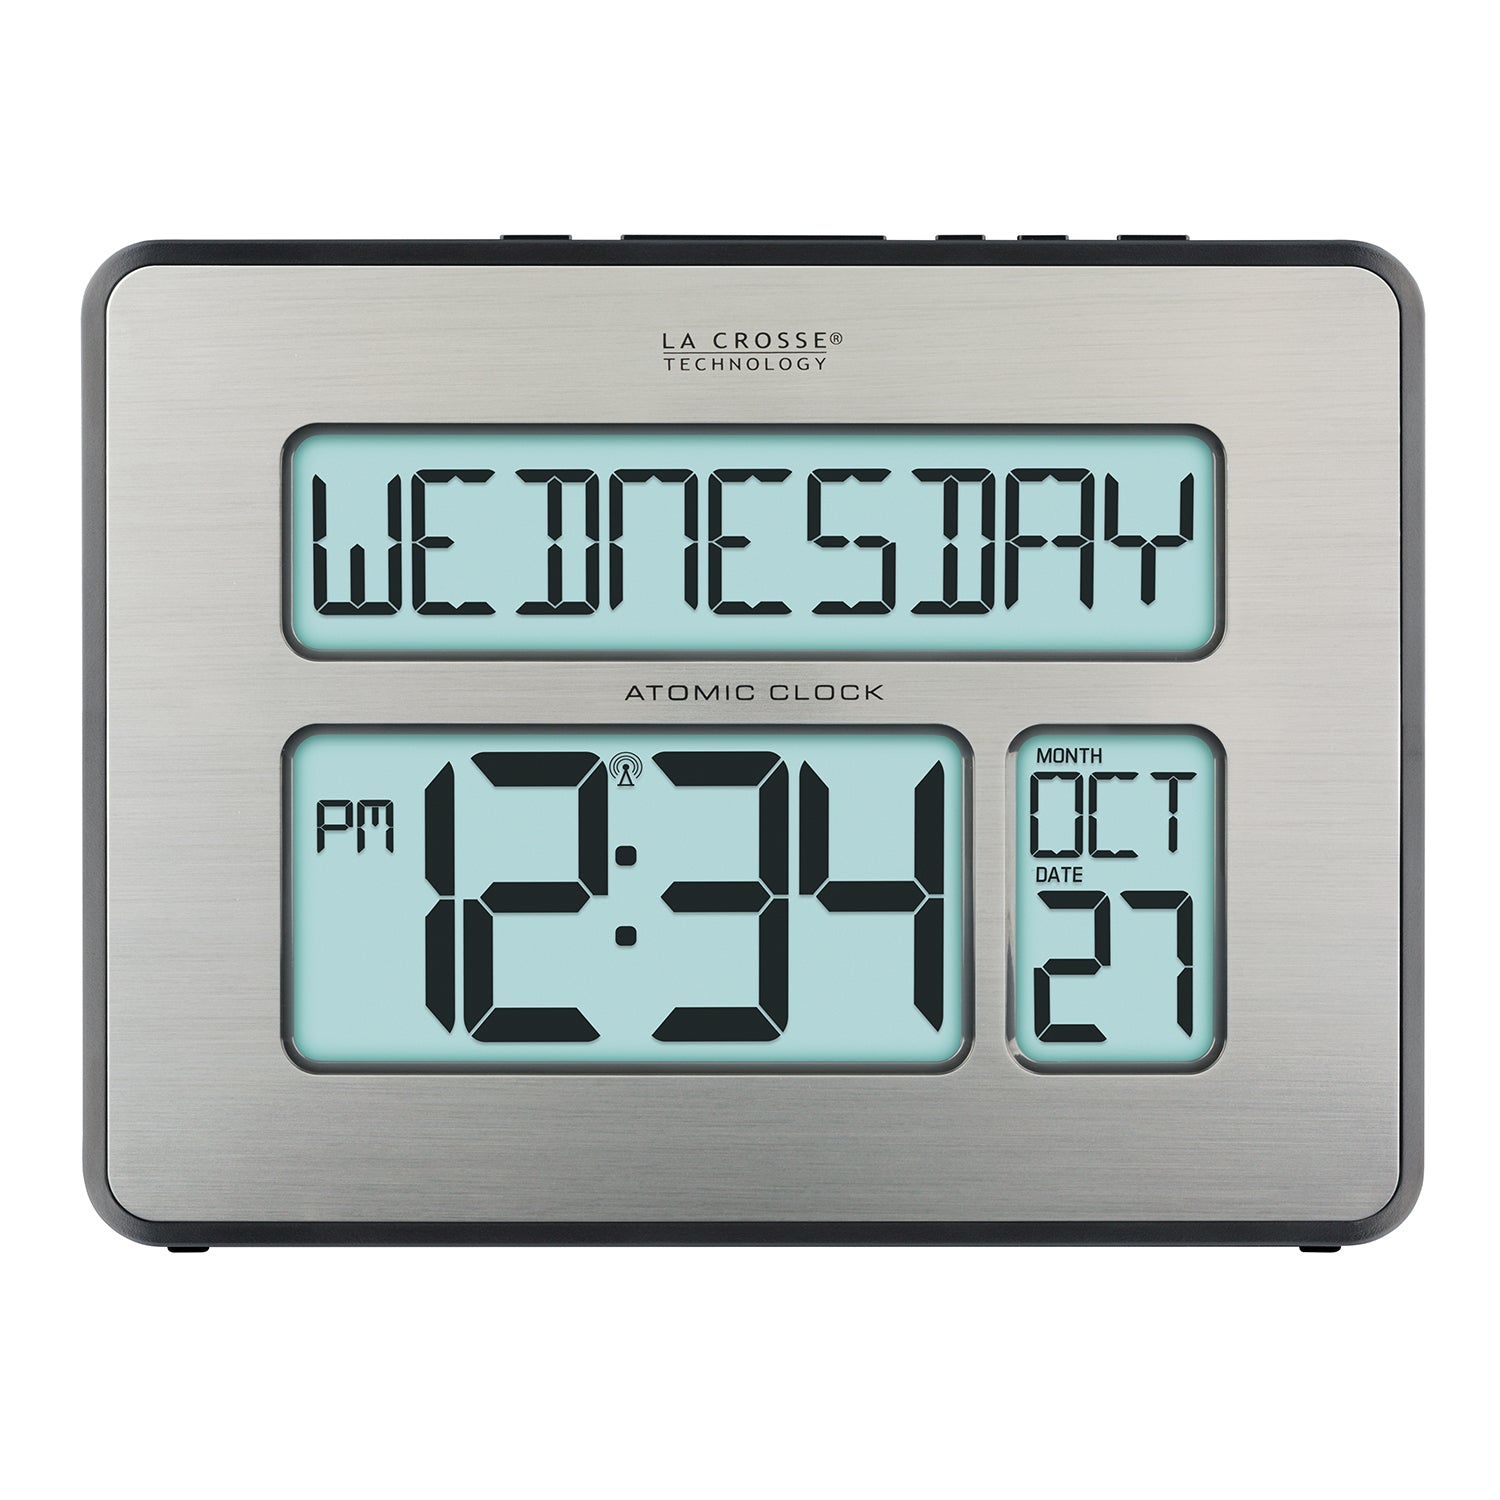 513-149 Atomic Digital Wall Clock with Indoor/Outdoor Temperature